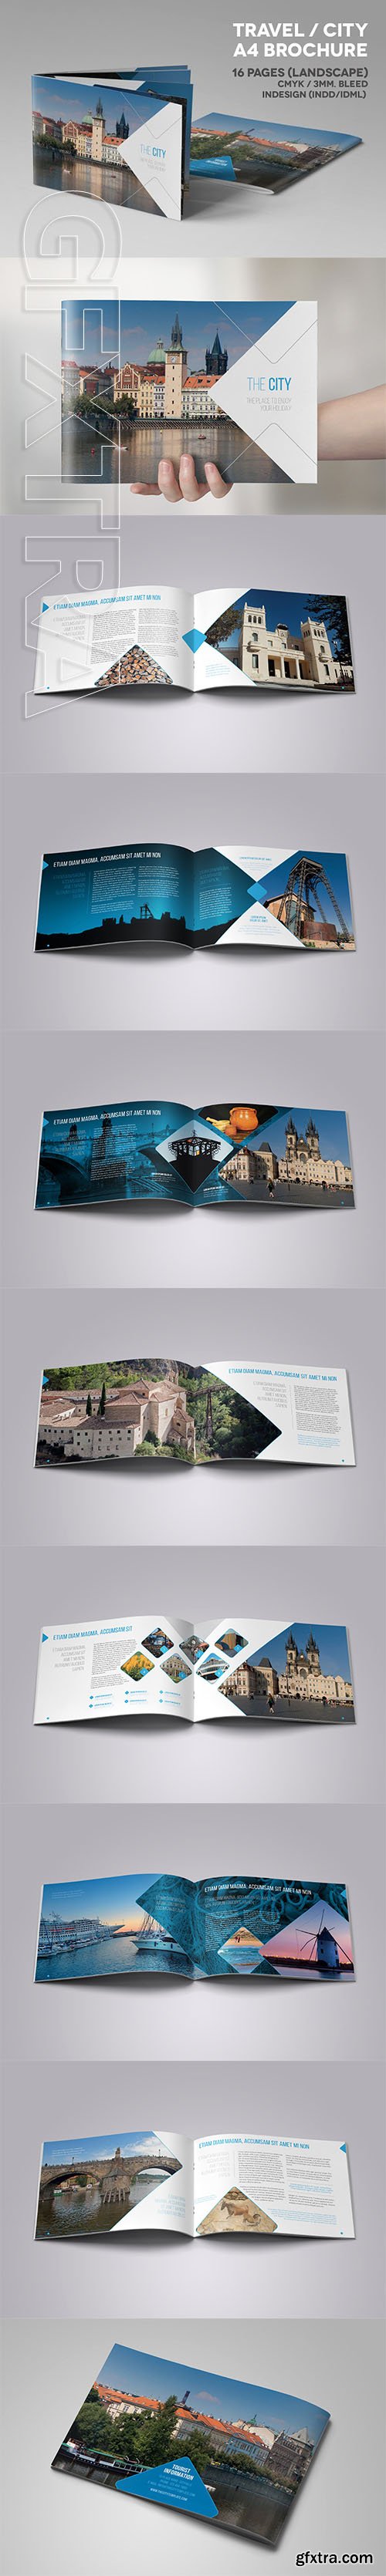 CreativeMarket - Travel City A4 landscape brochure 2335511